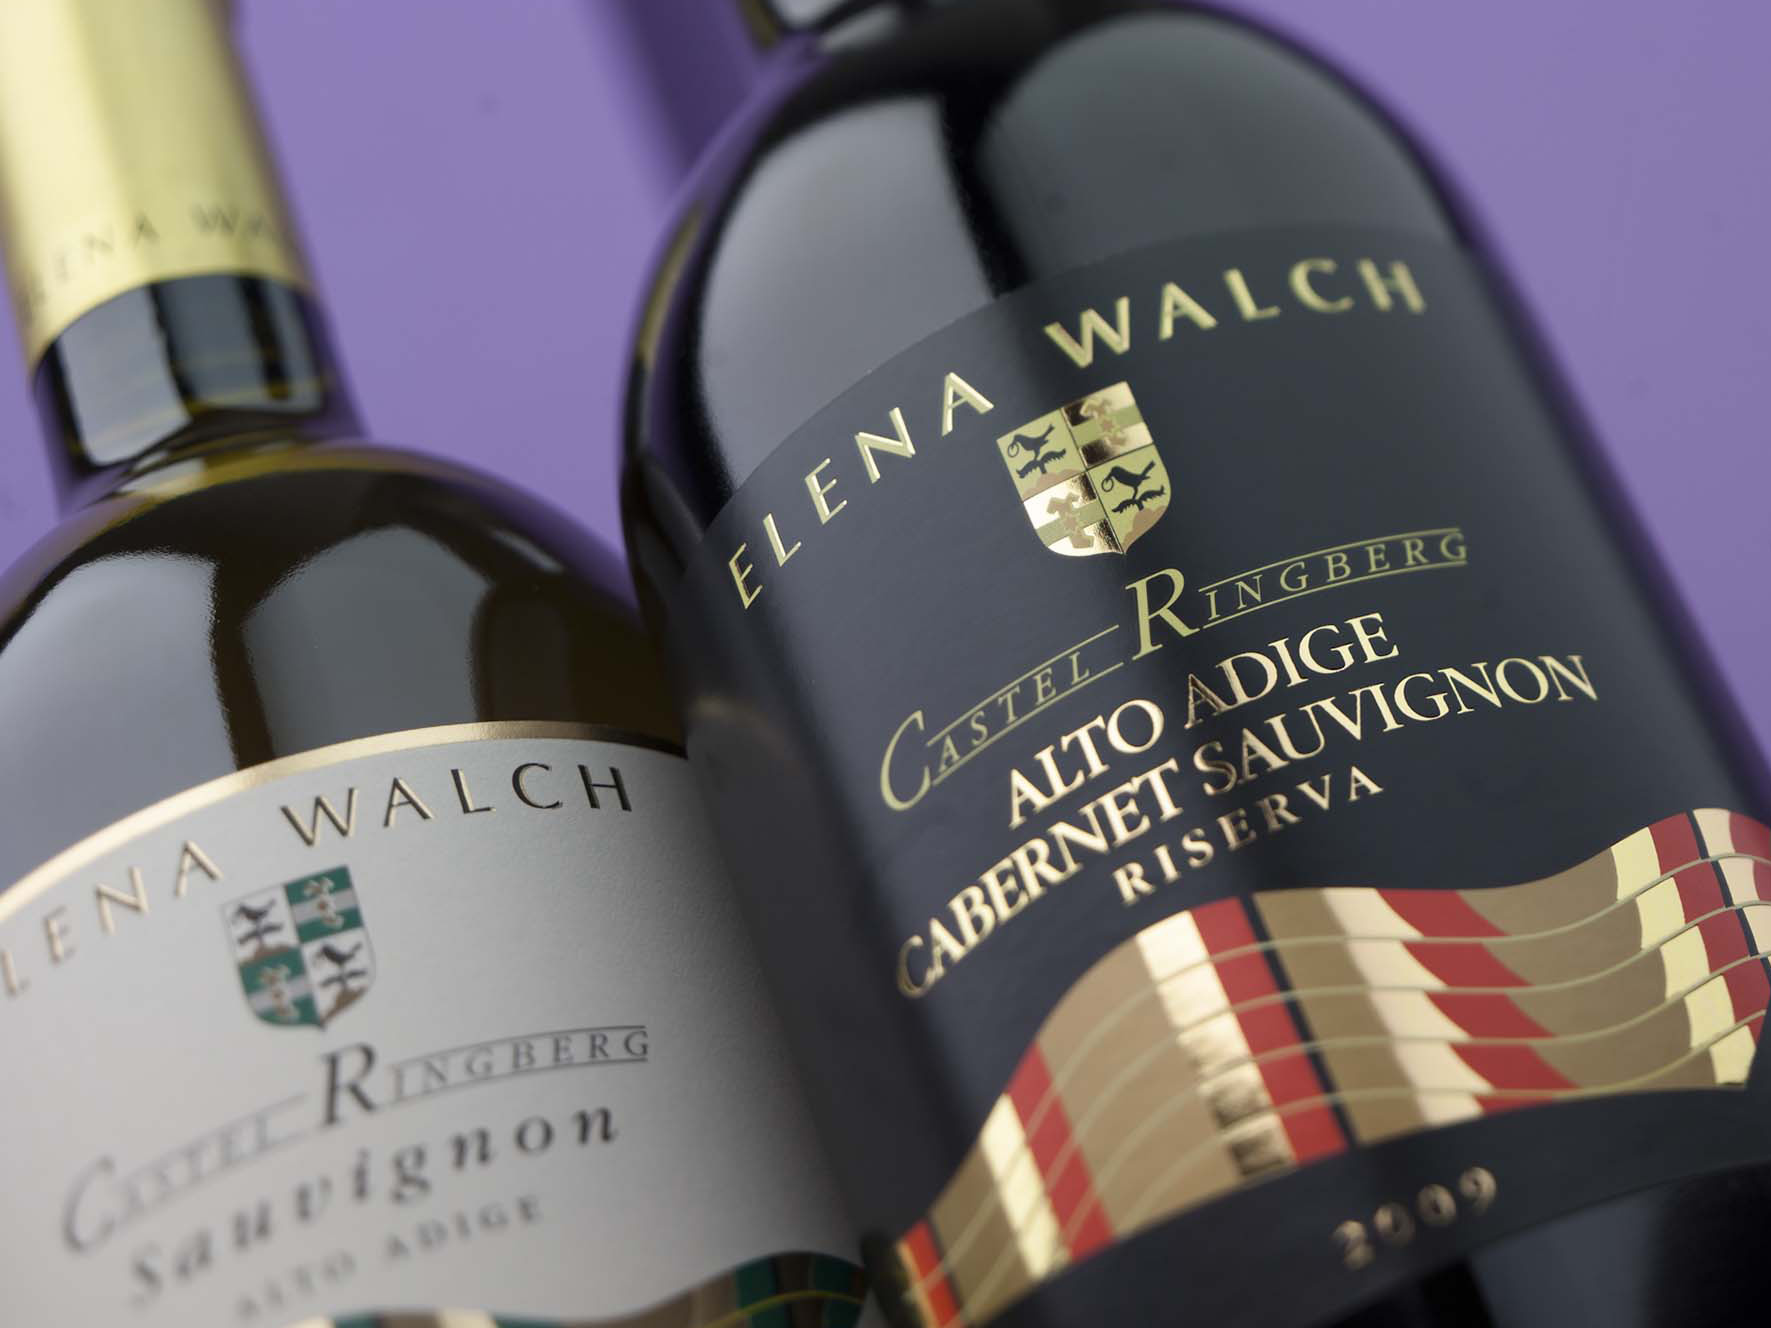 bottles of Elena Walch Sauvignon wines